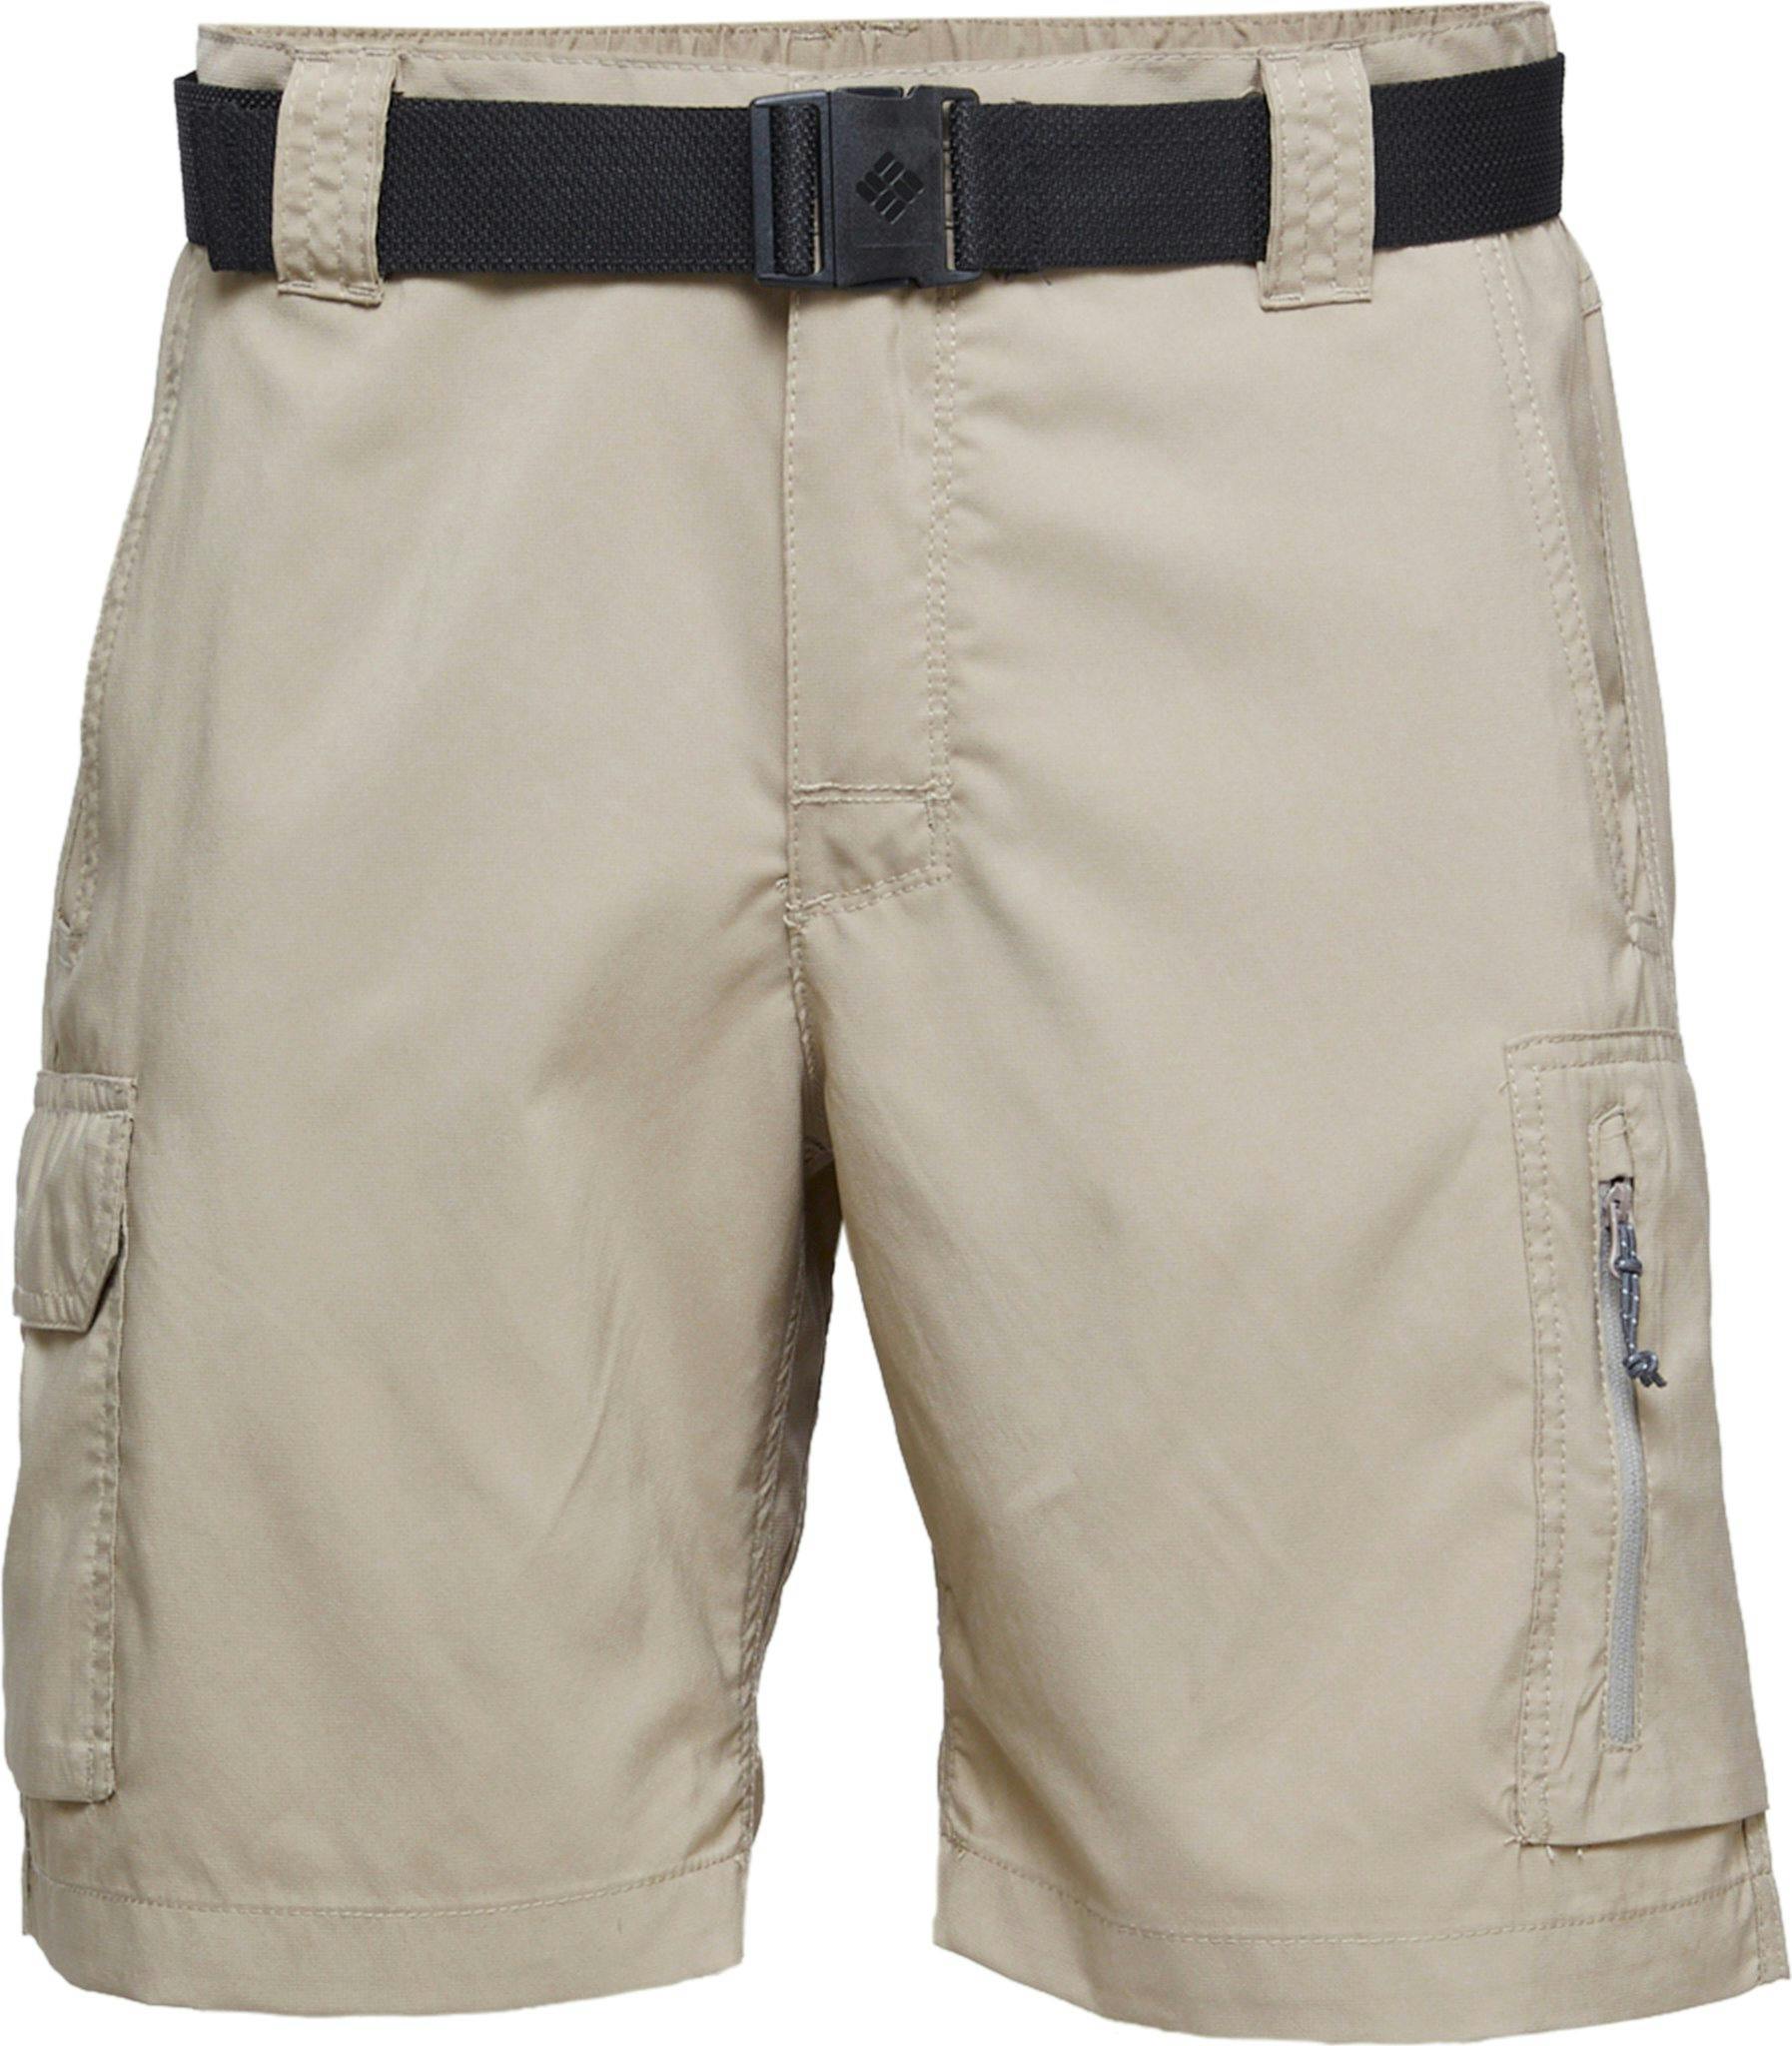 Product image for Silver Ridge™ Utility Cargo Shorts - Big size - Men's